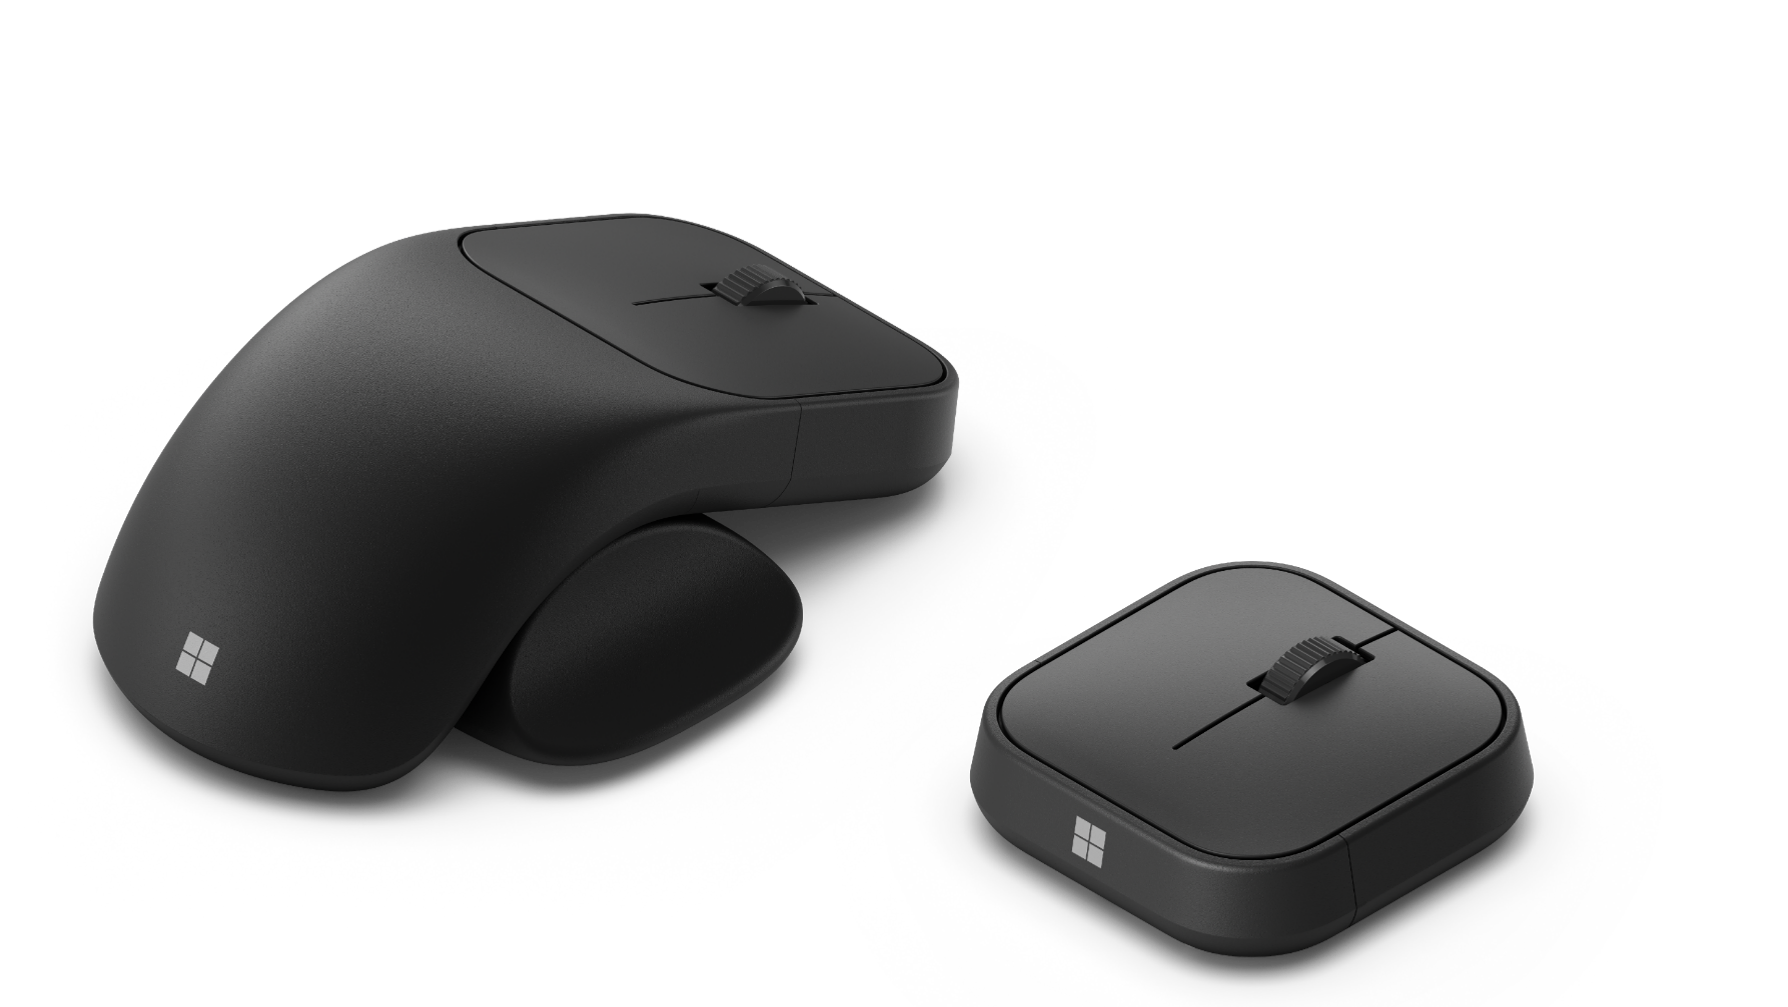 "Microsoft Adaptive Mouse"